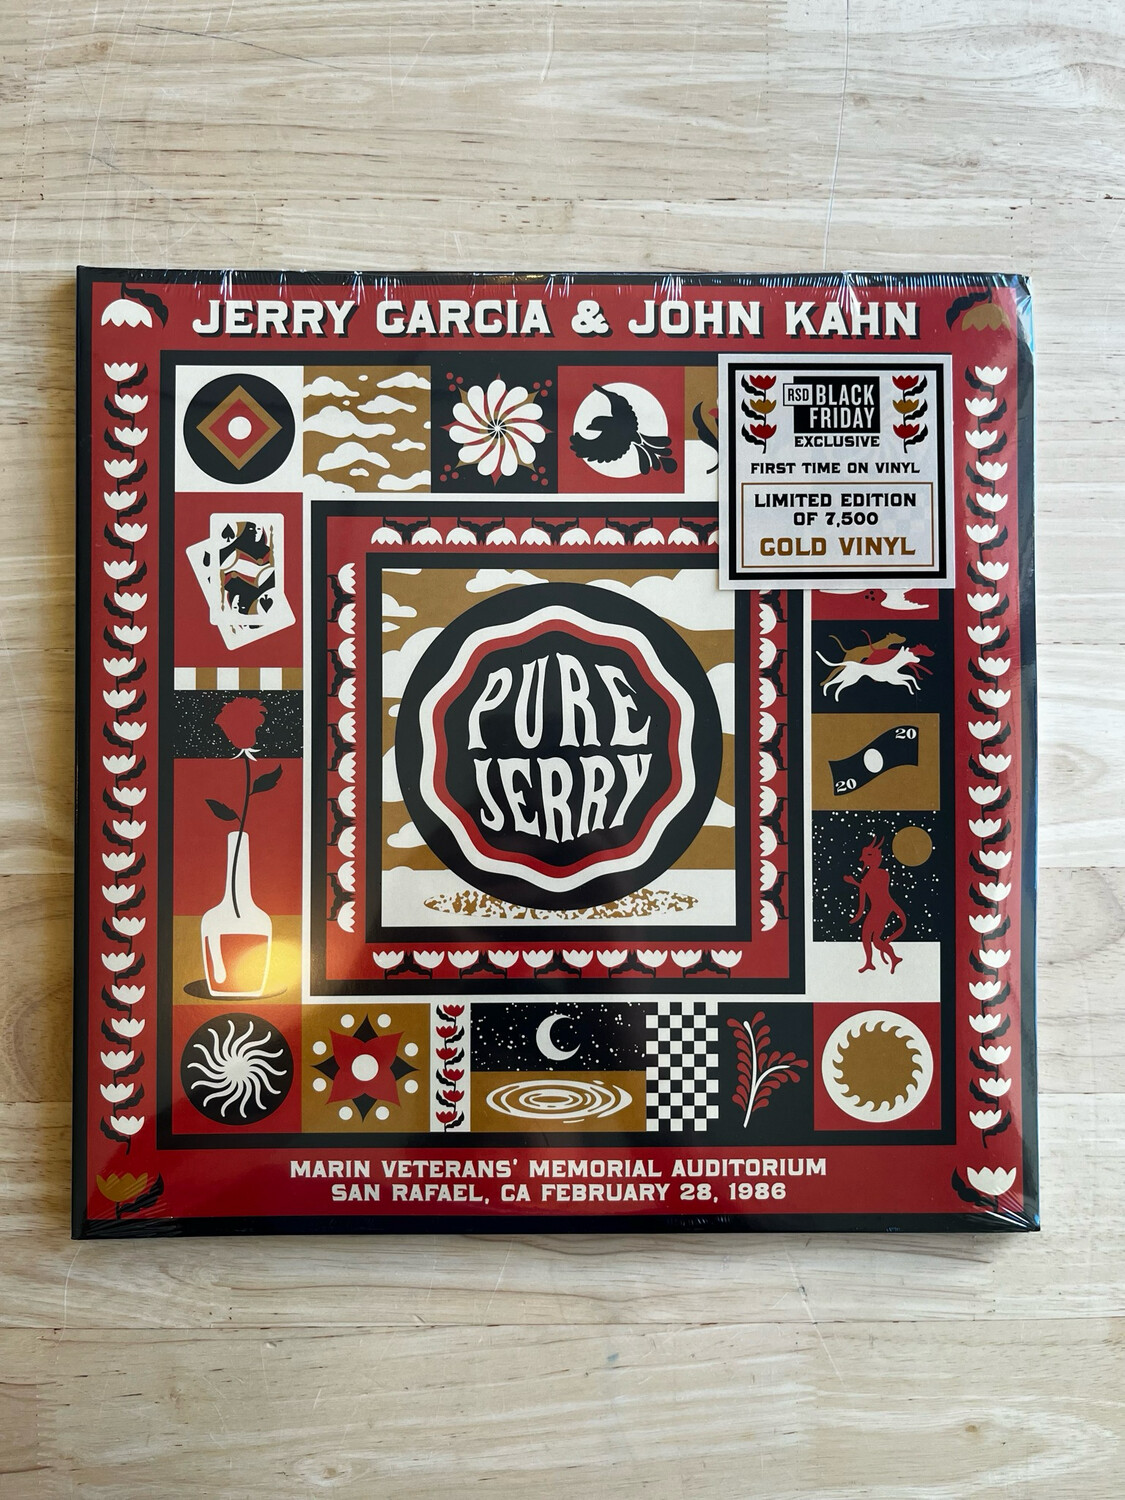 Jerry Garcia & John Kahn "Pure Jerry" LP (RSD Black Friday 2023)